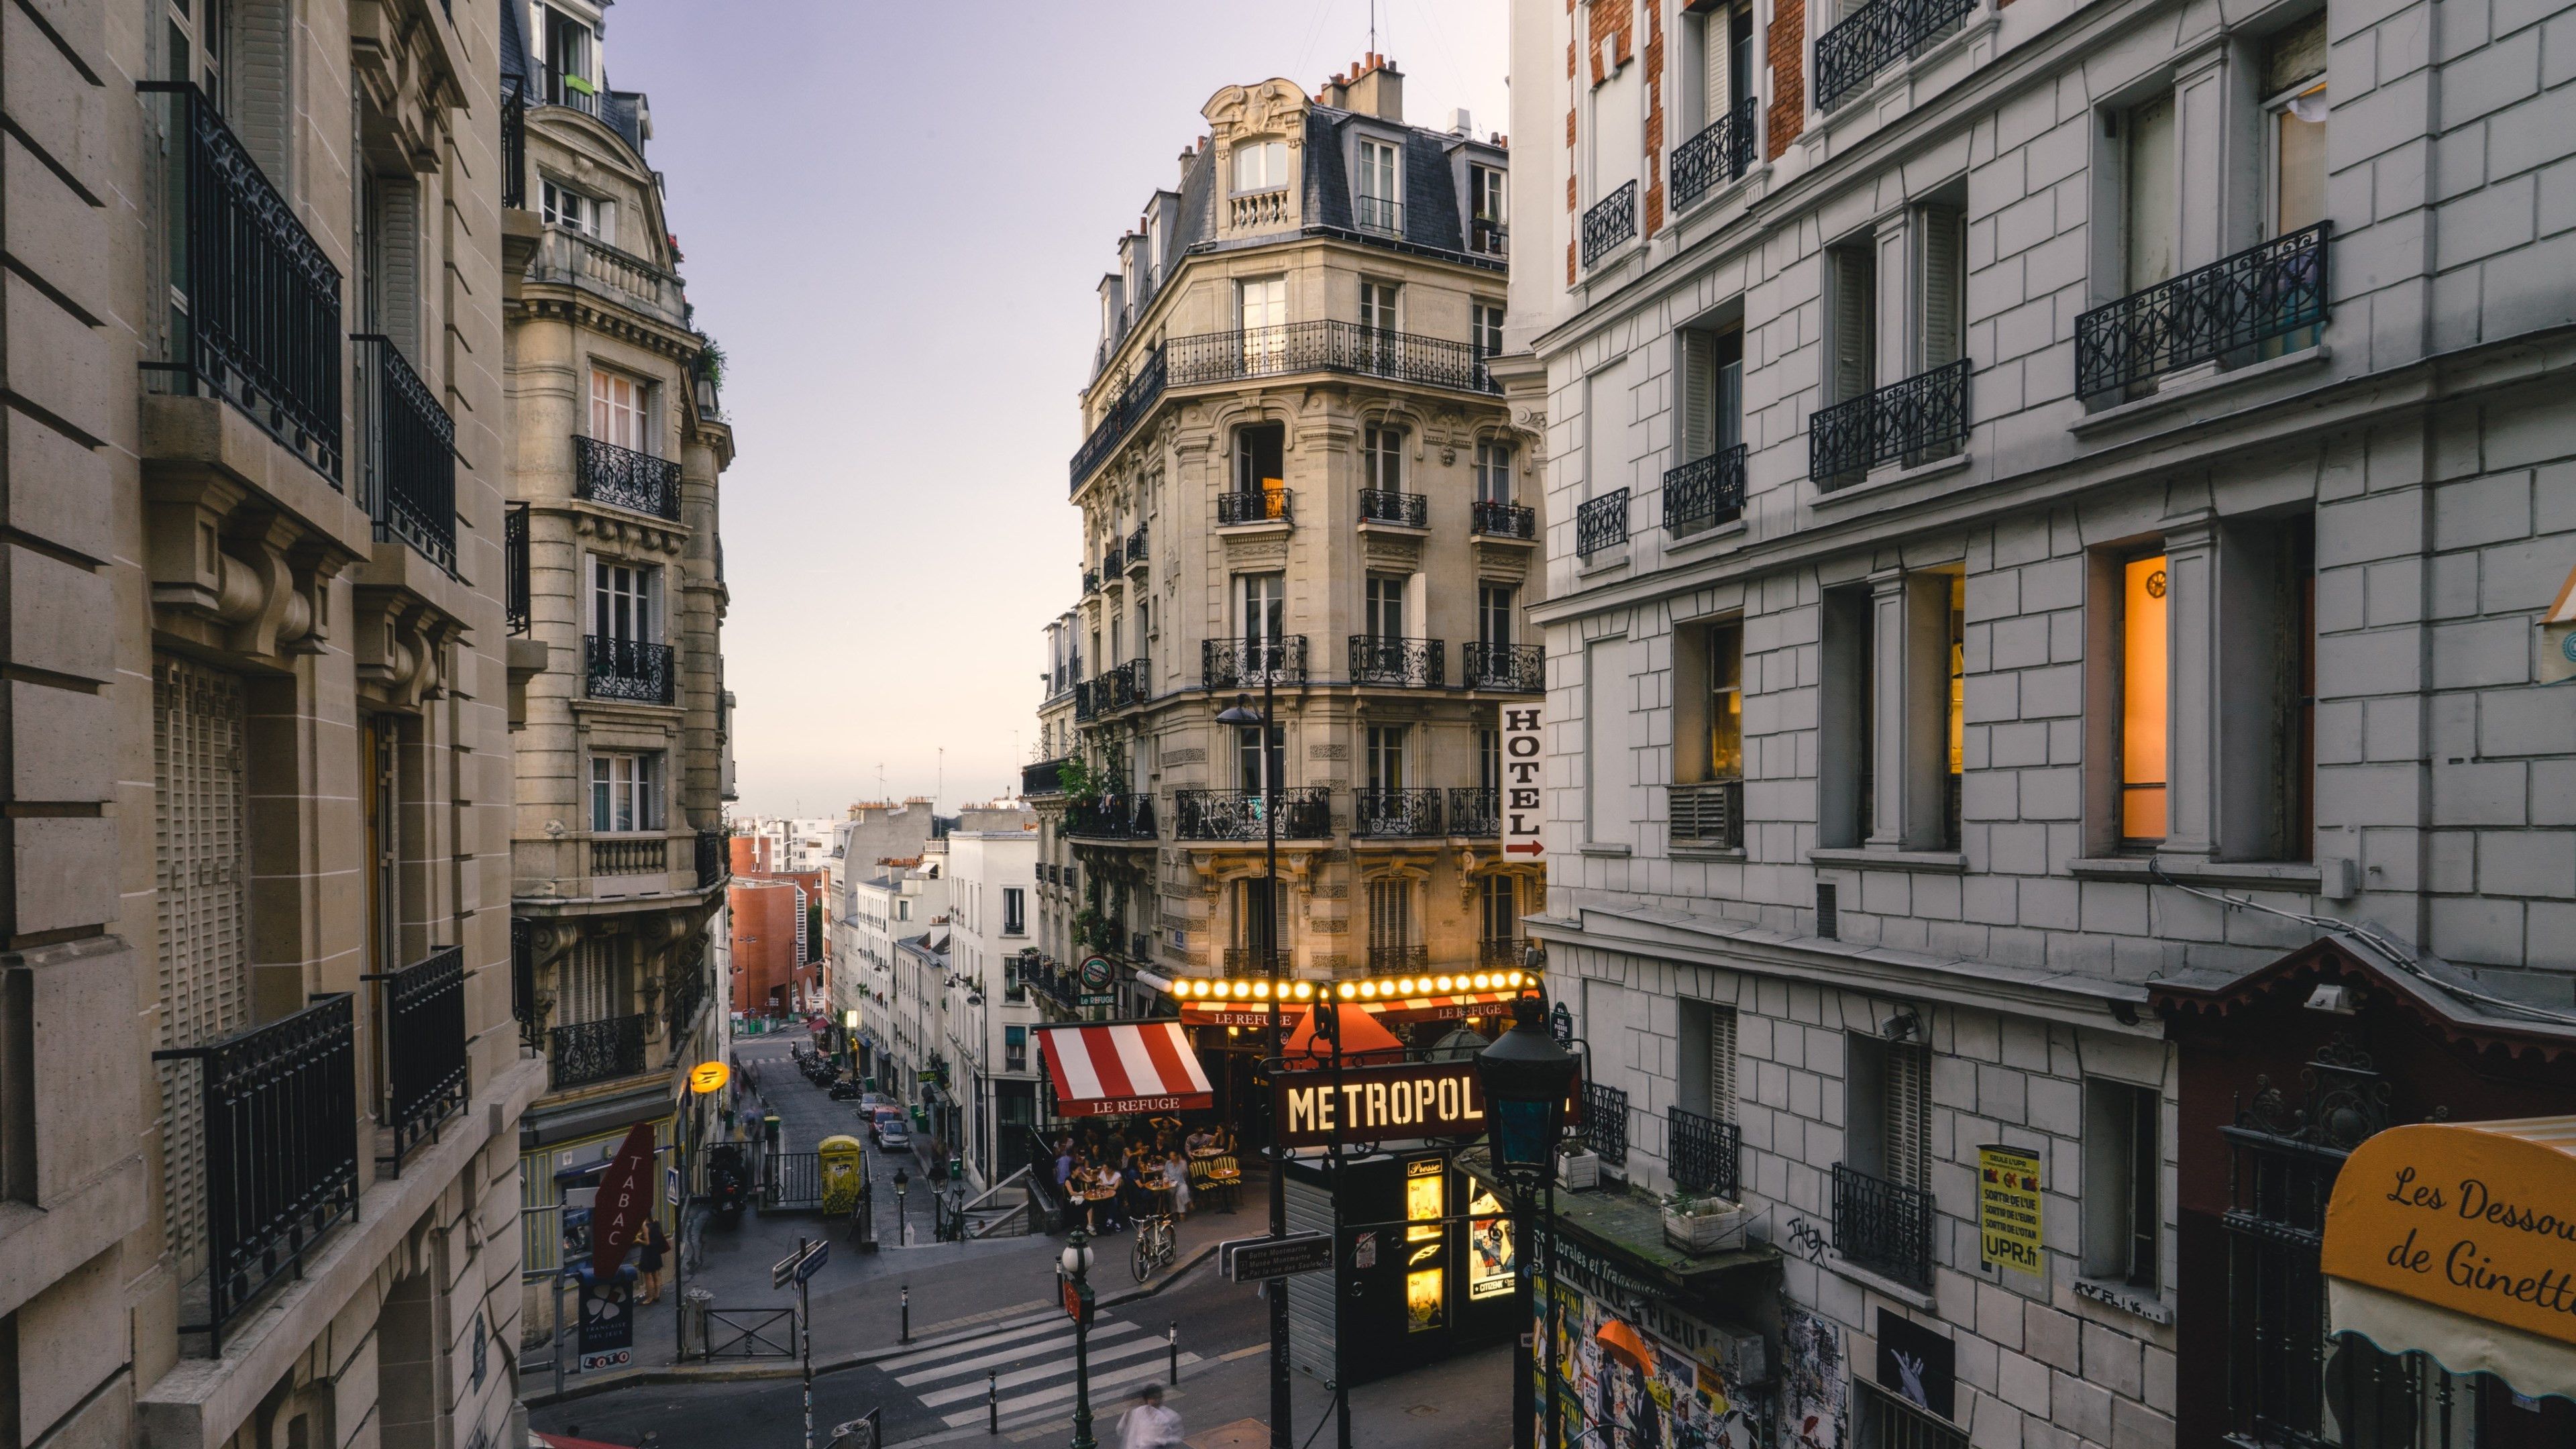 Download wallpaper: Travel through Paris 3840x2160